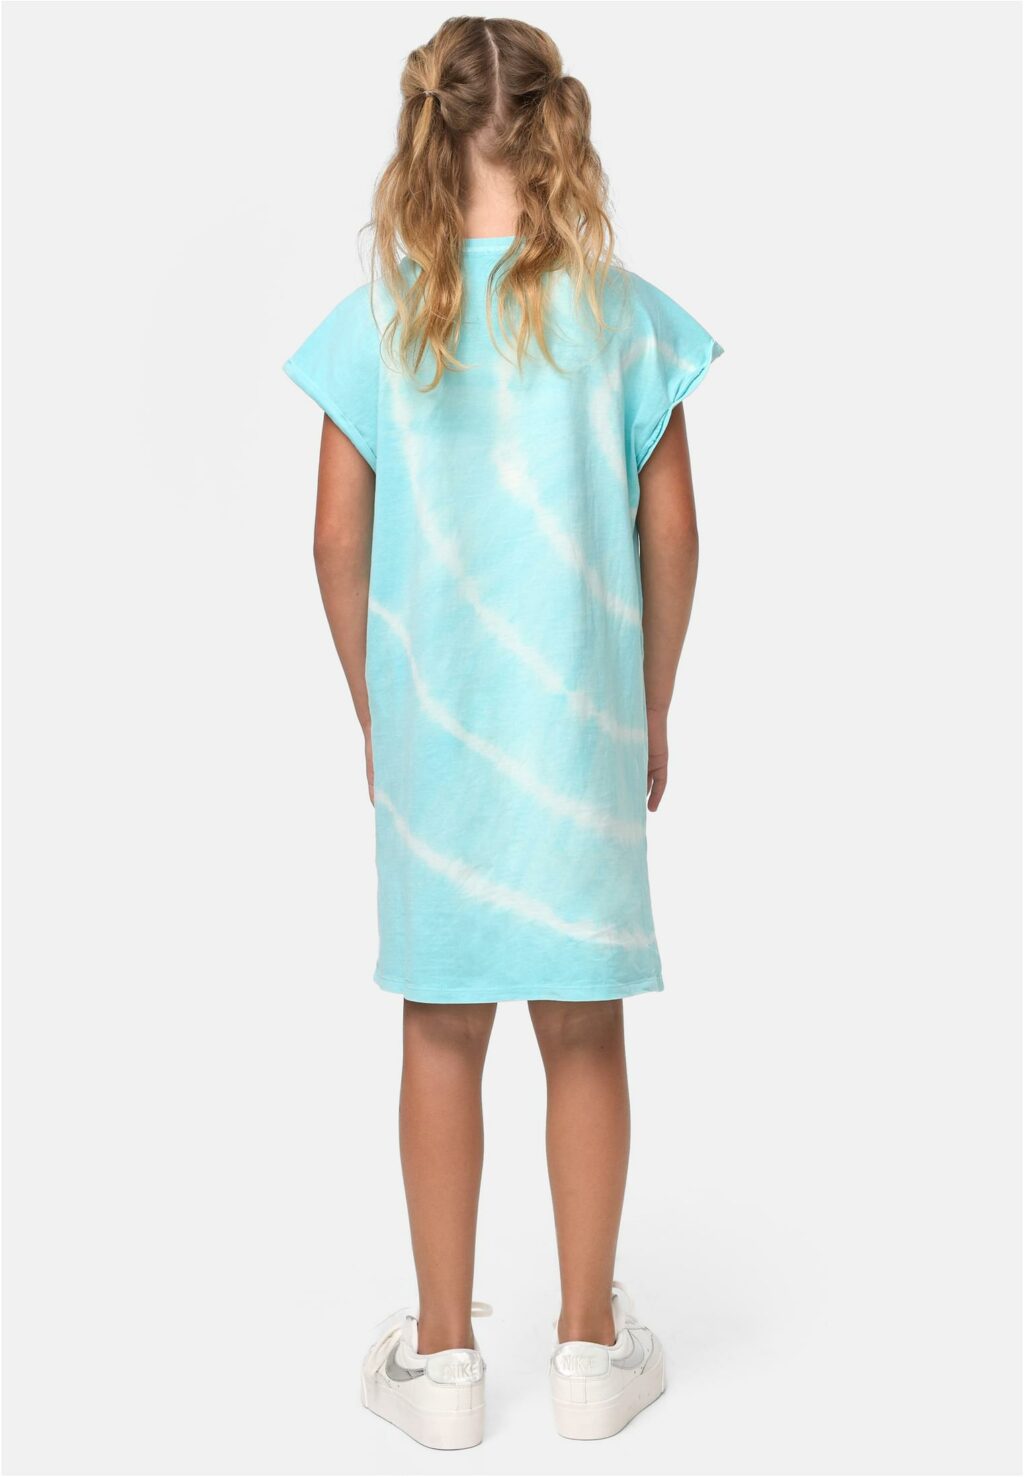 Girls Tie Dye Dress aquablue UCK3448